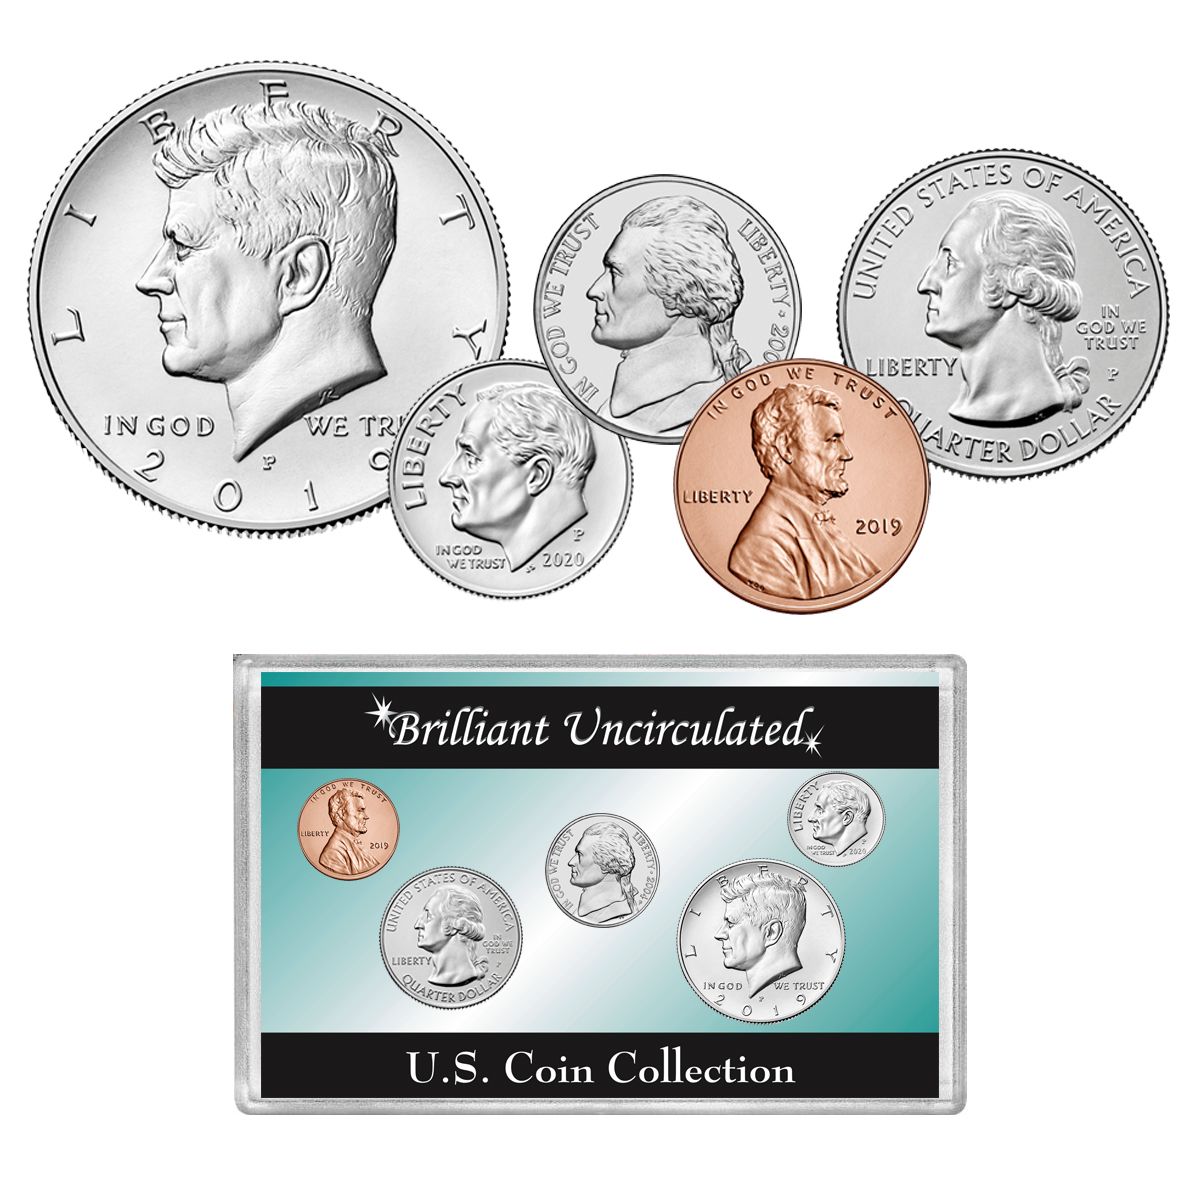 Brilliant Uncirculated US Coins - The Patriotic Mint